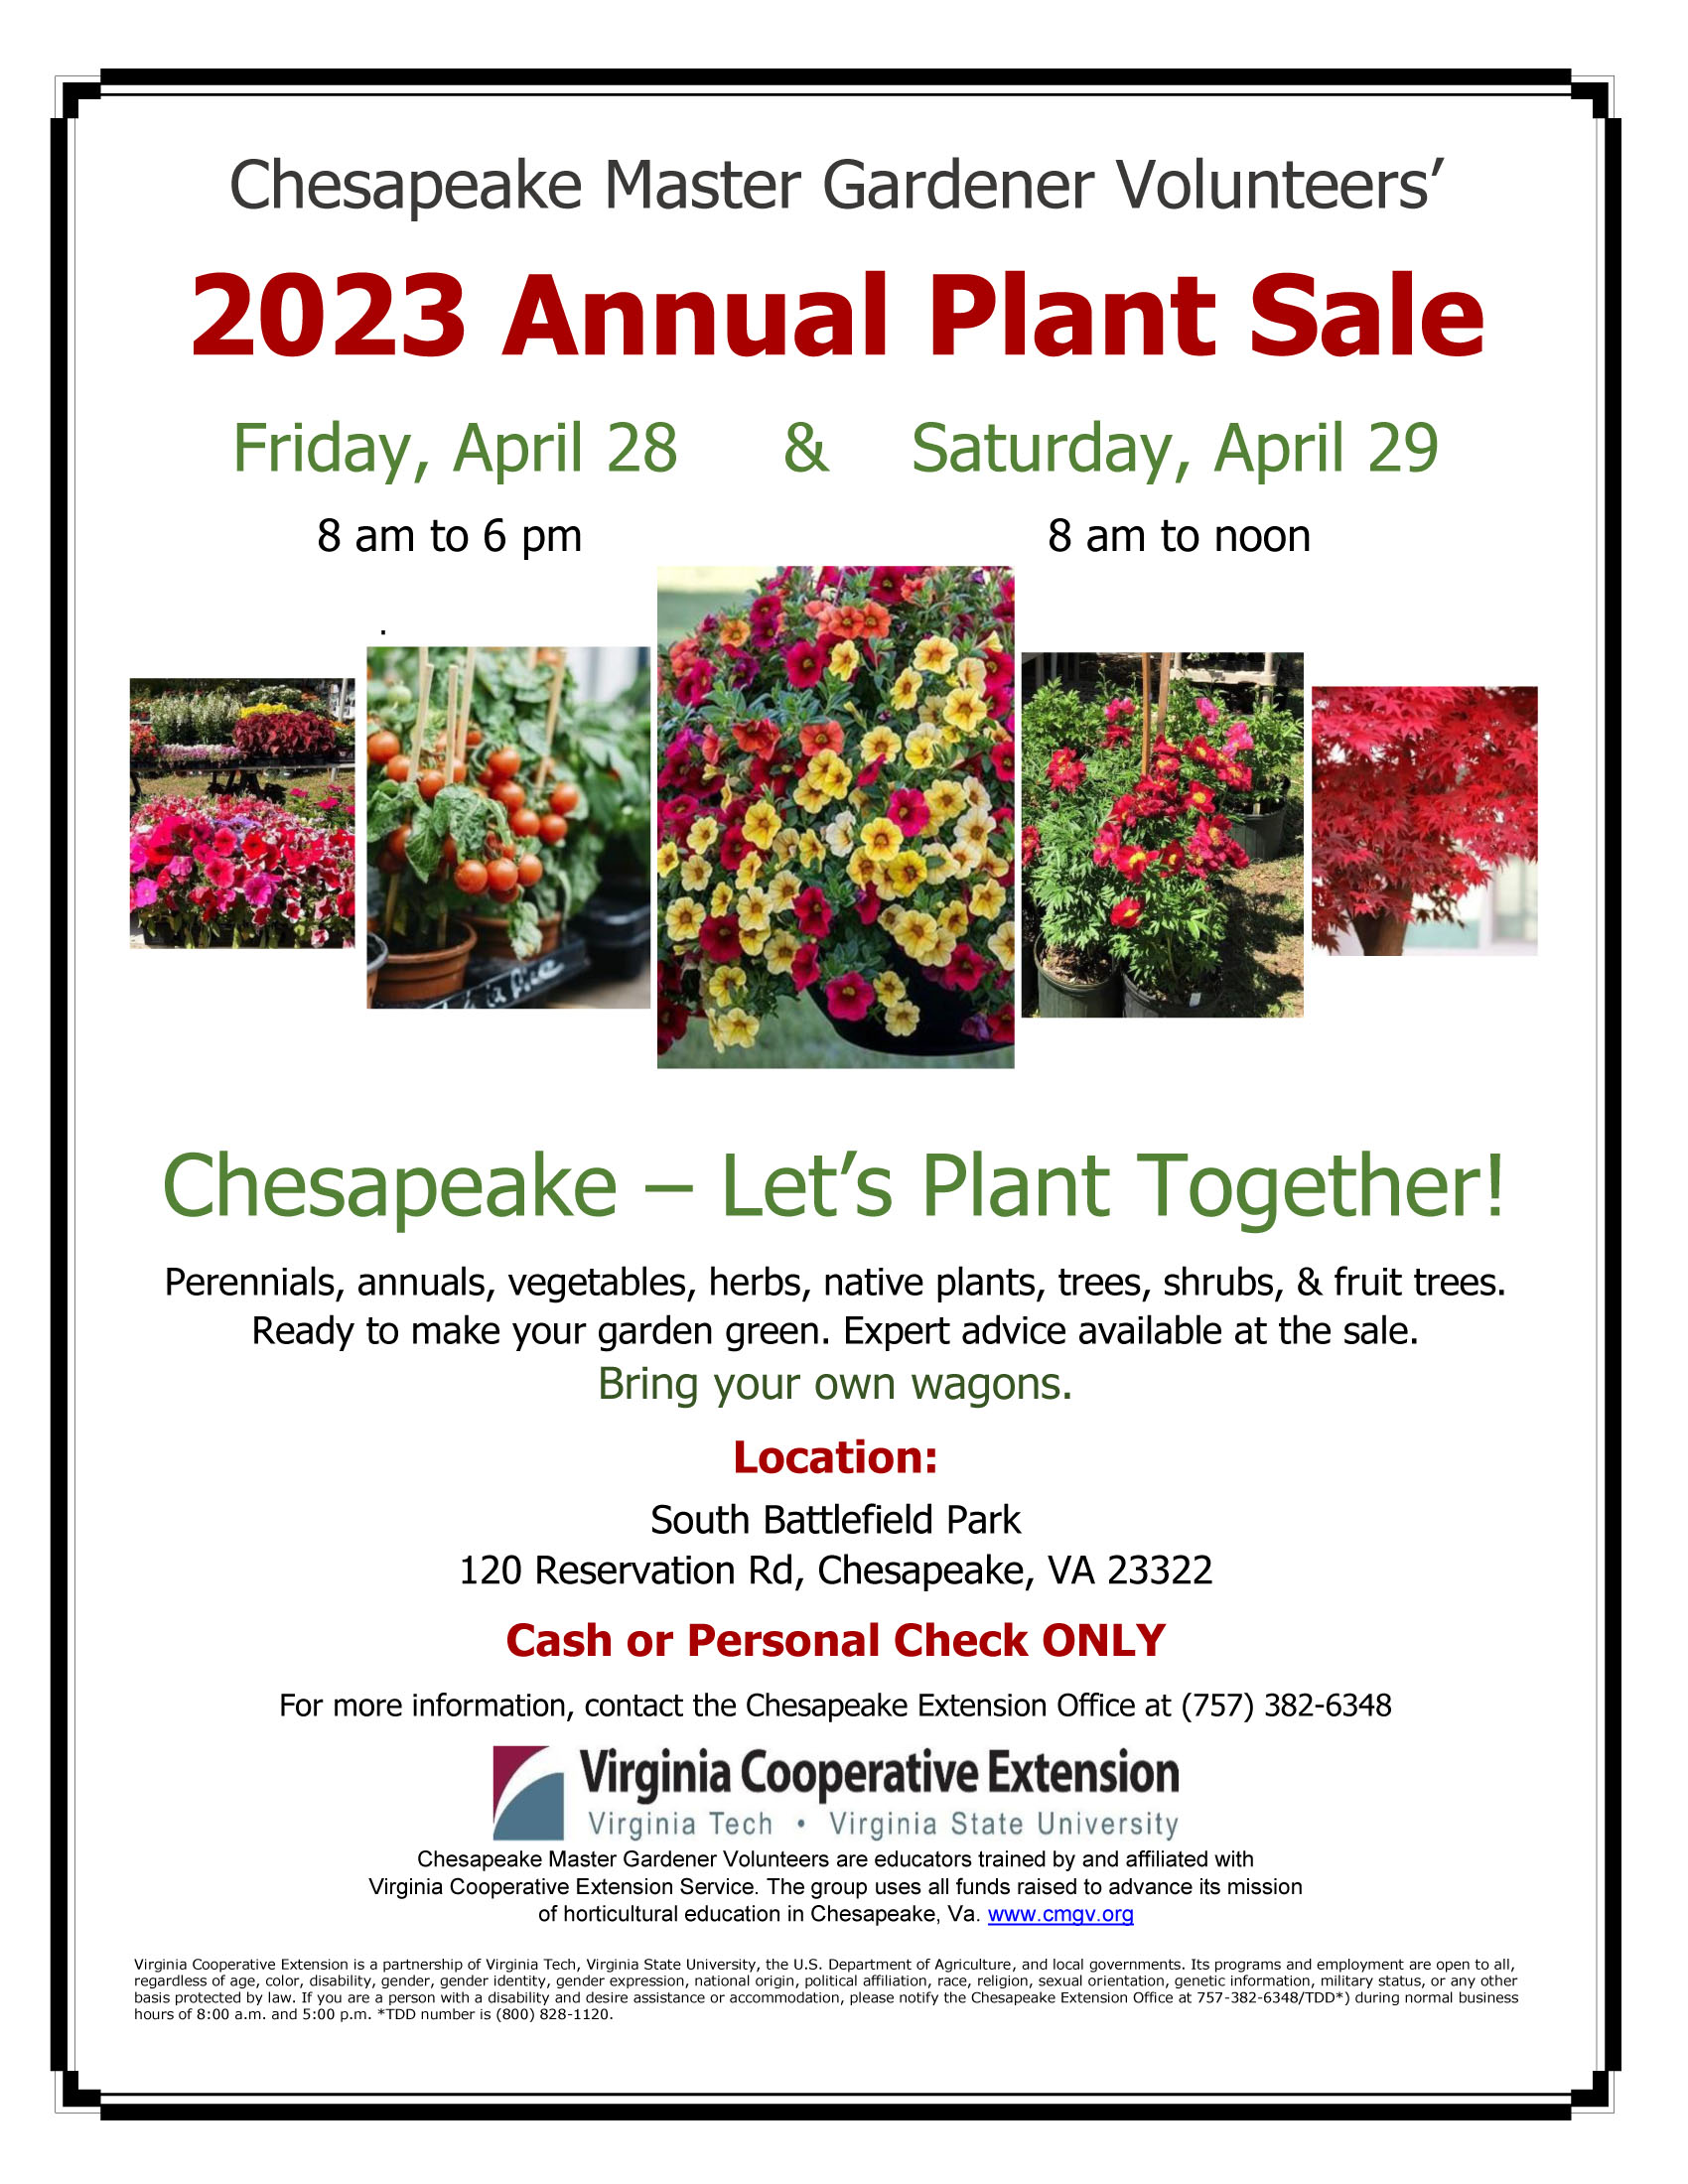 2023 Approved Chesapeake Master Gardener Plant Sale Flyer